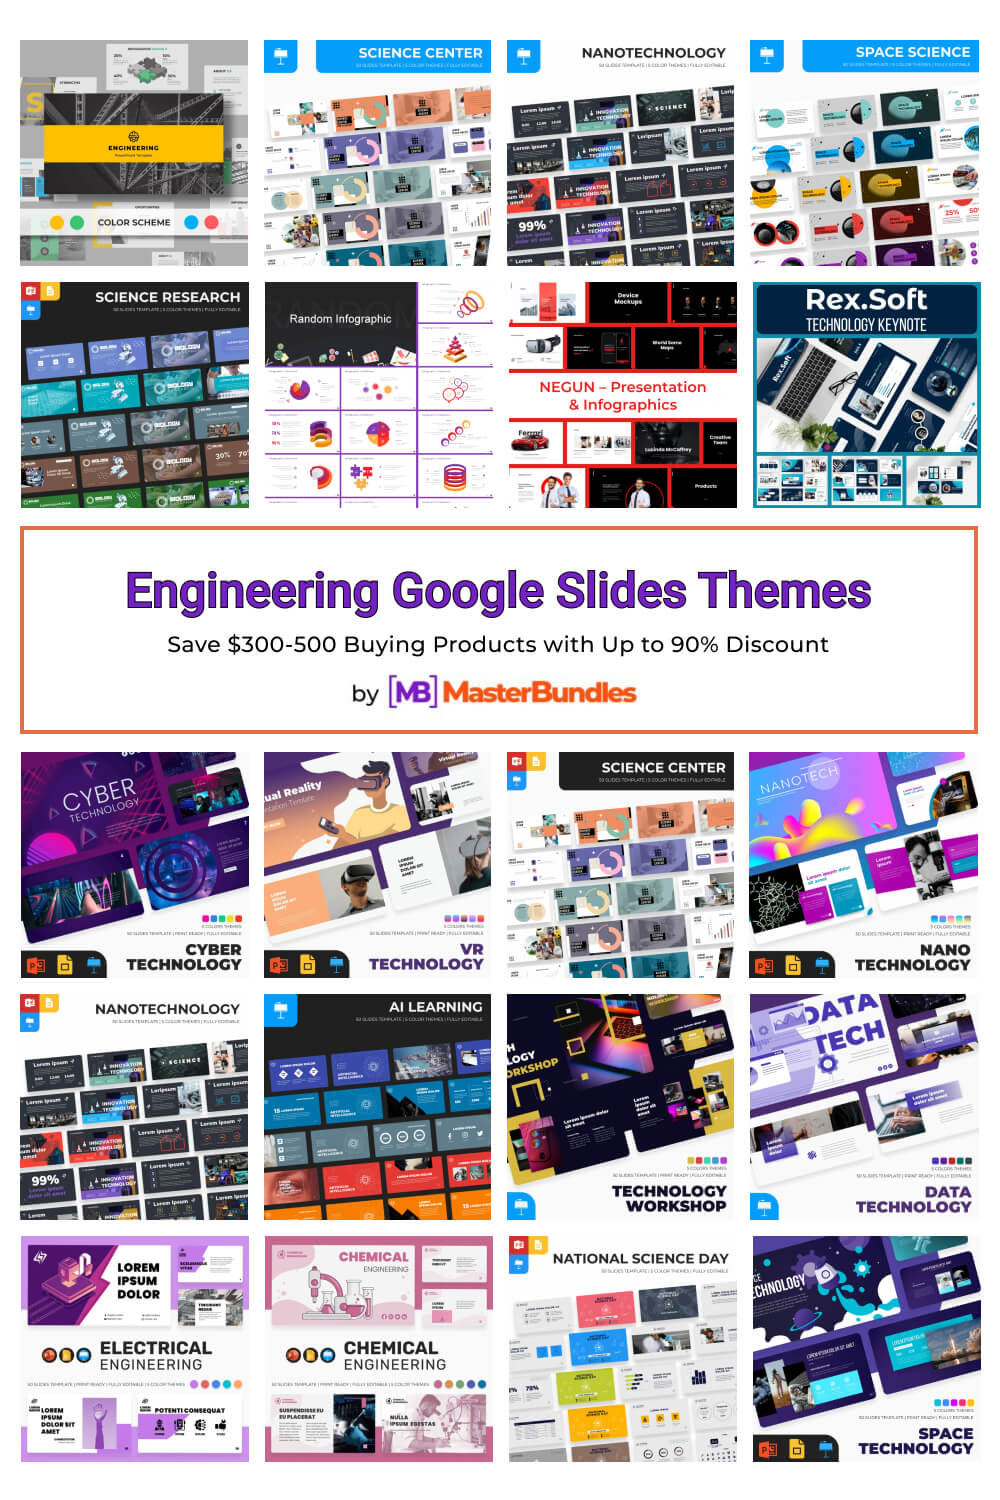 engineering google slides themes pinterest image.